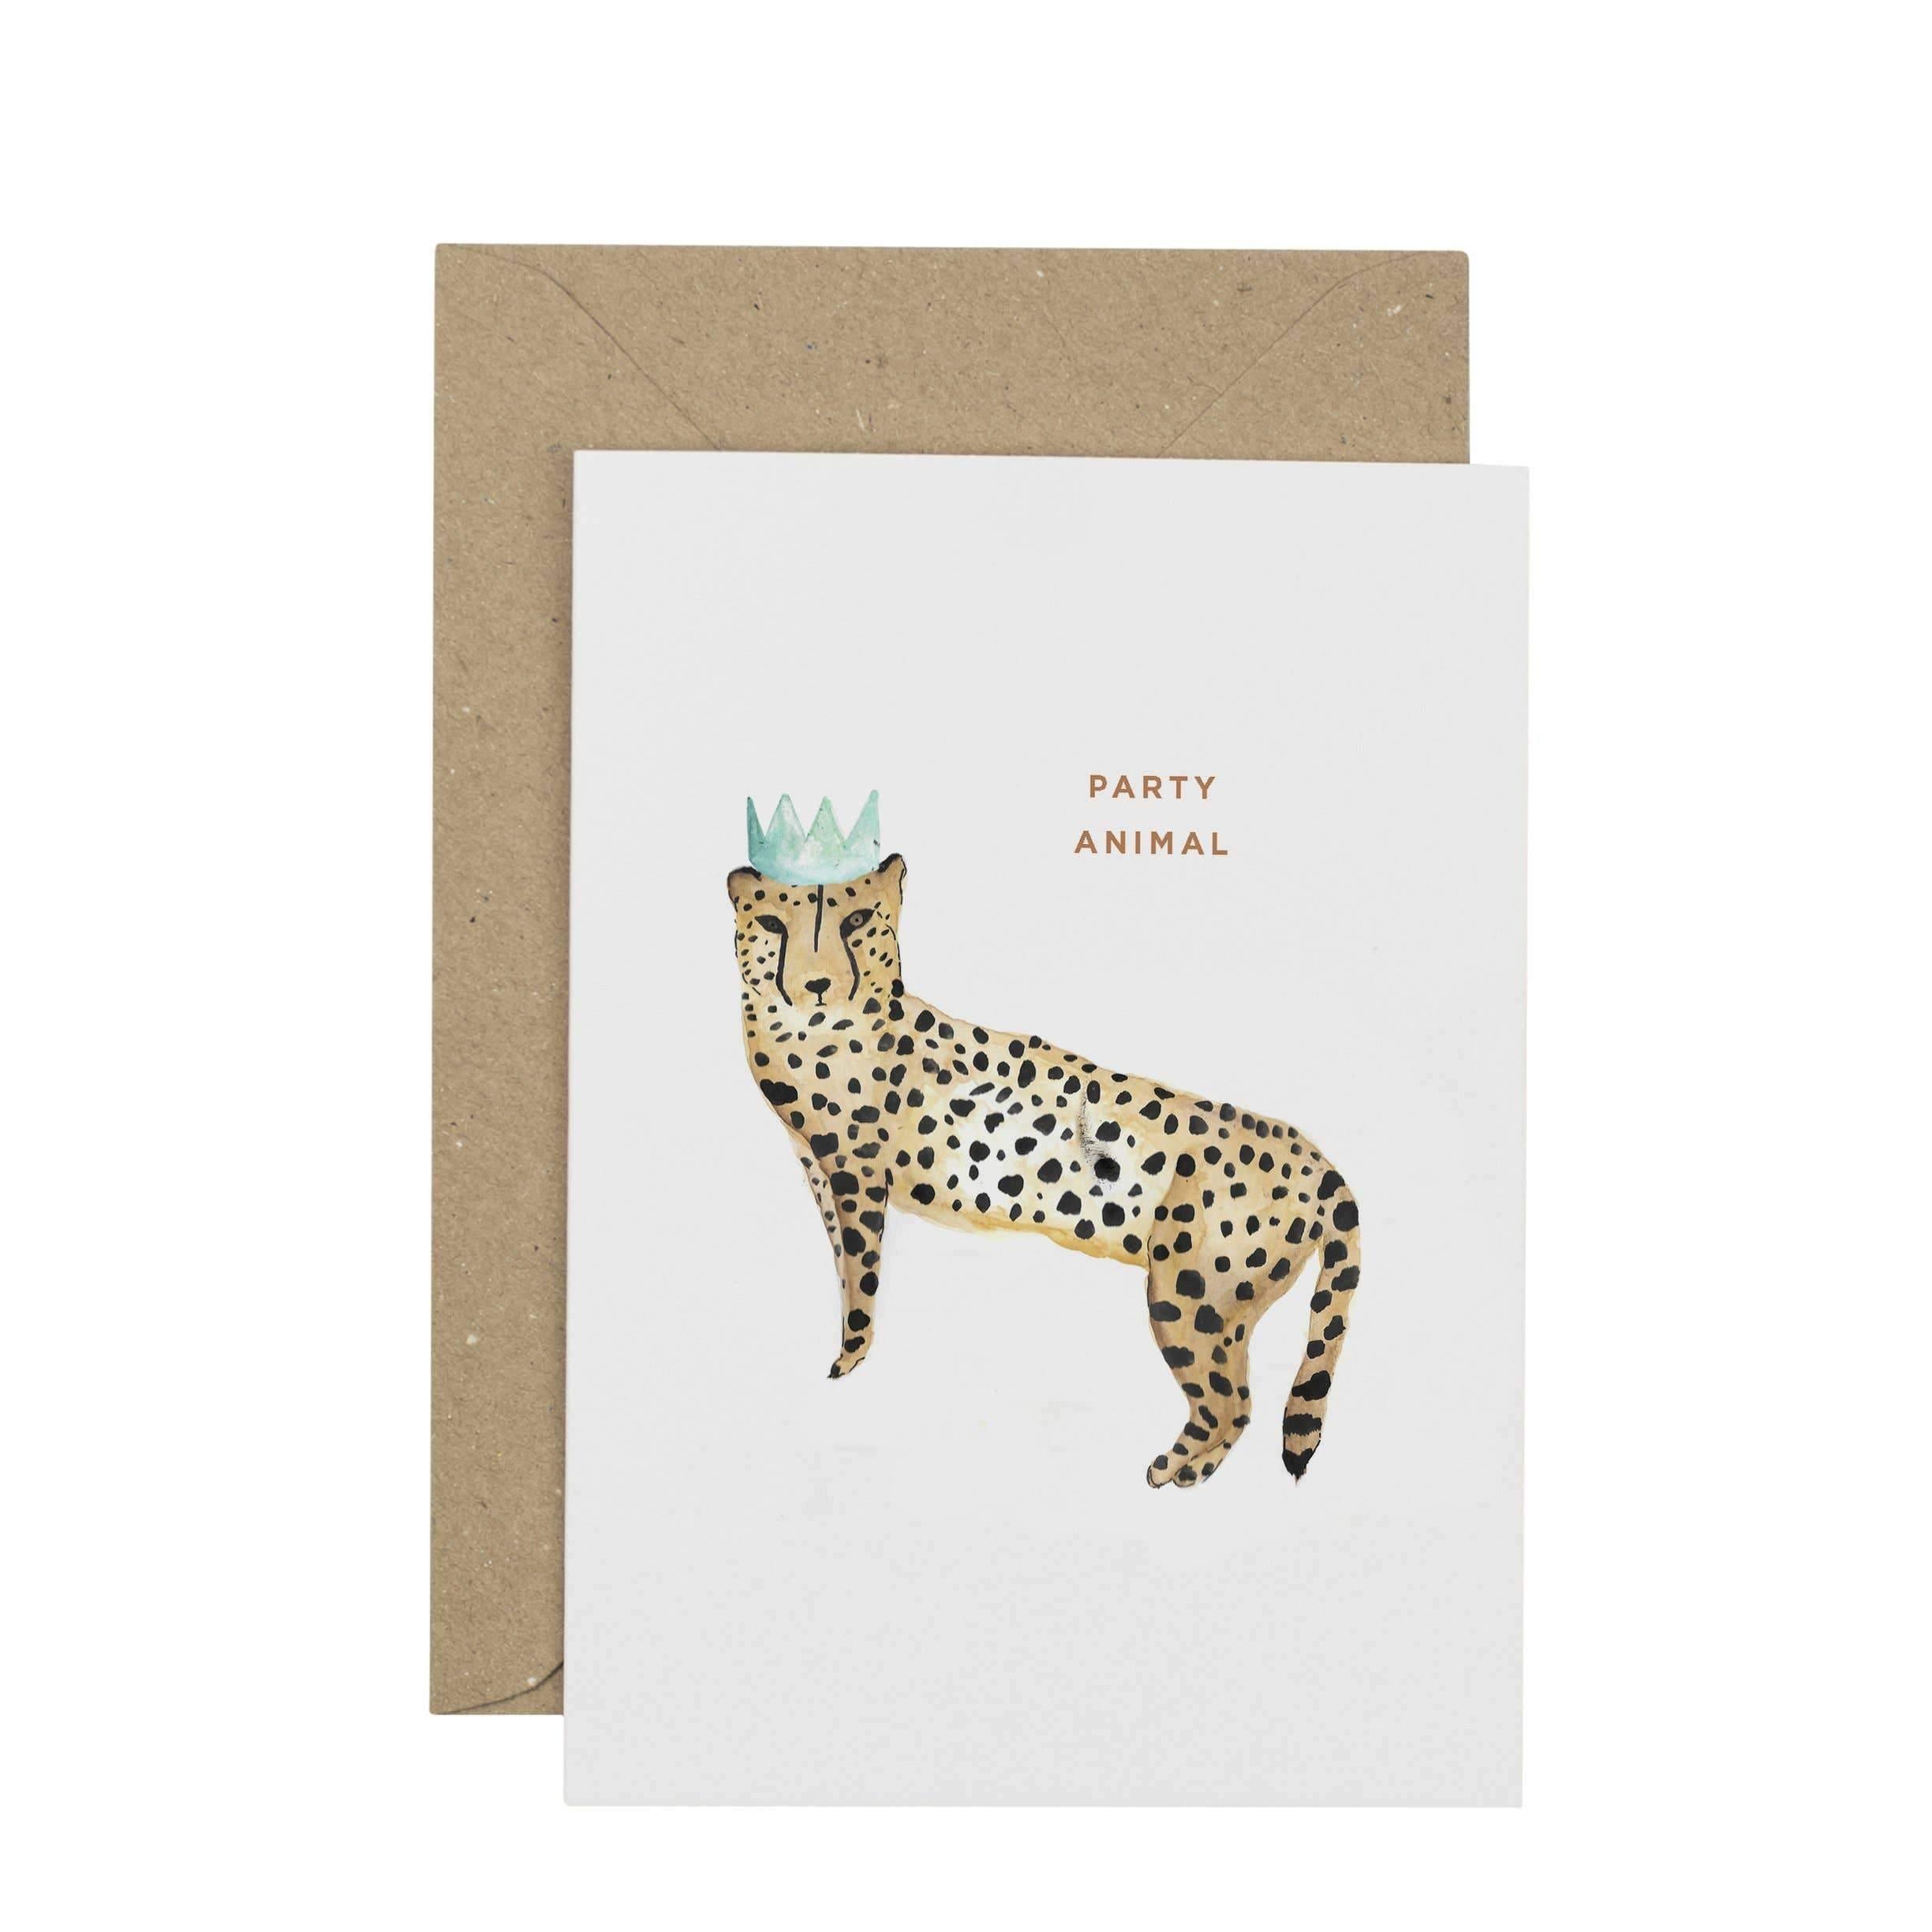 Phone bag in leopard / cheetah print fabric - grab and go bag – Tracey  Lipman